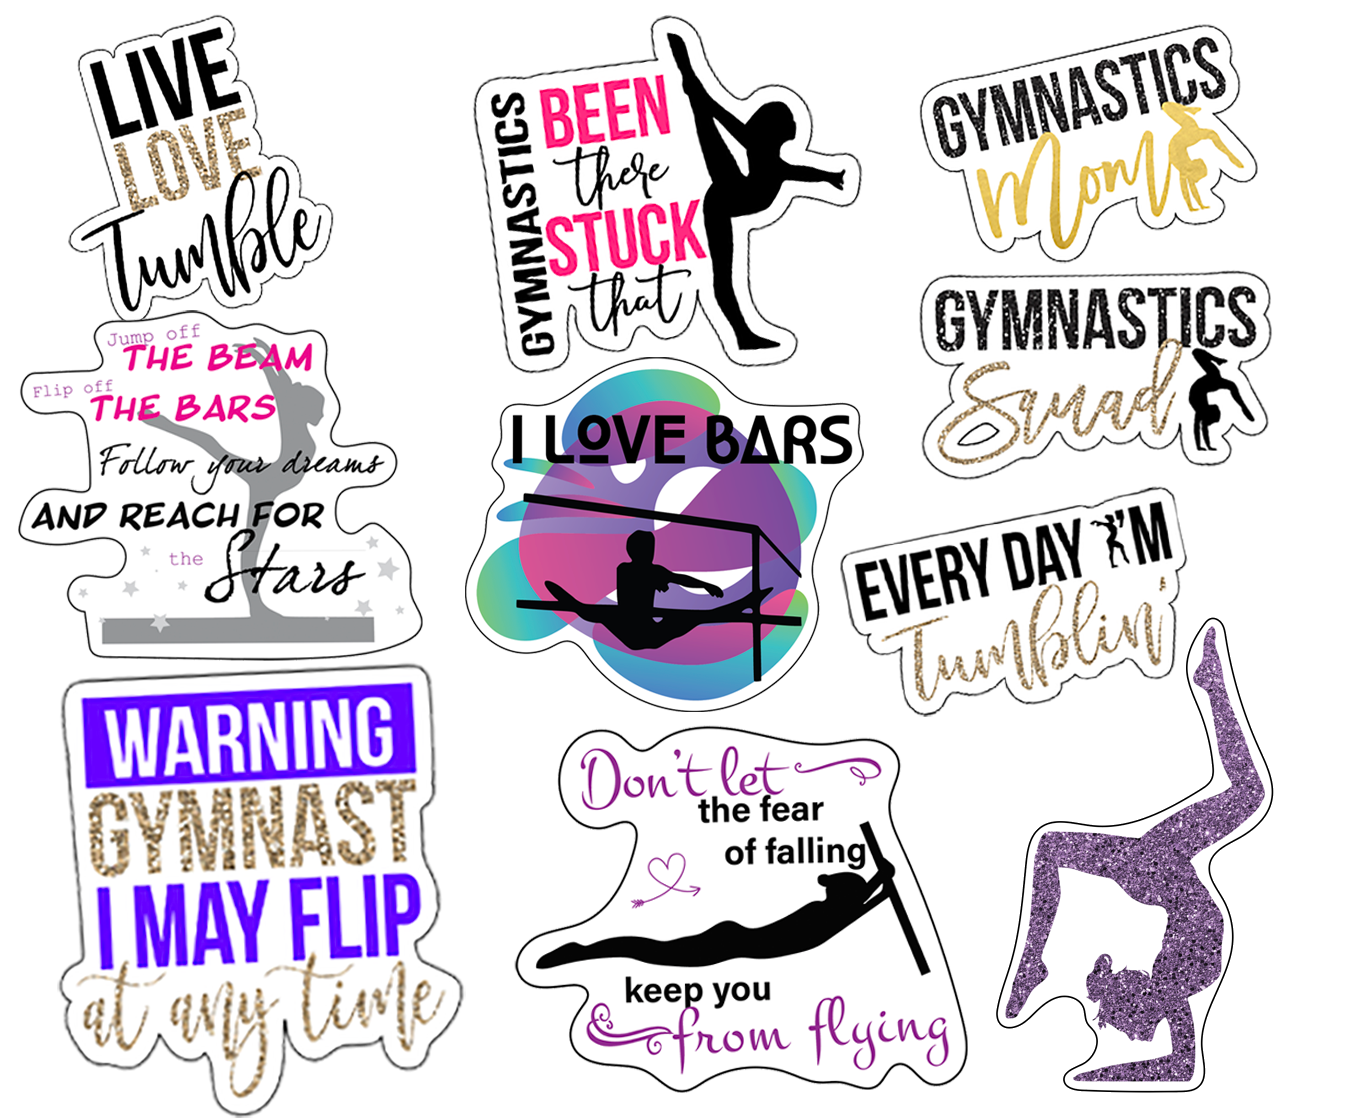 Gymnastics Stickers